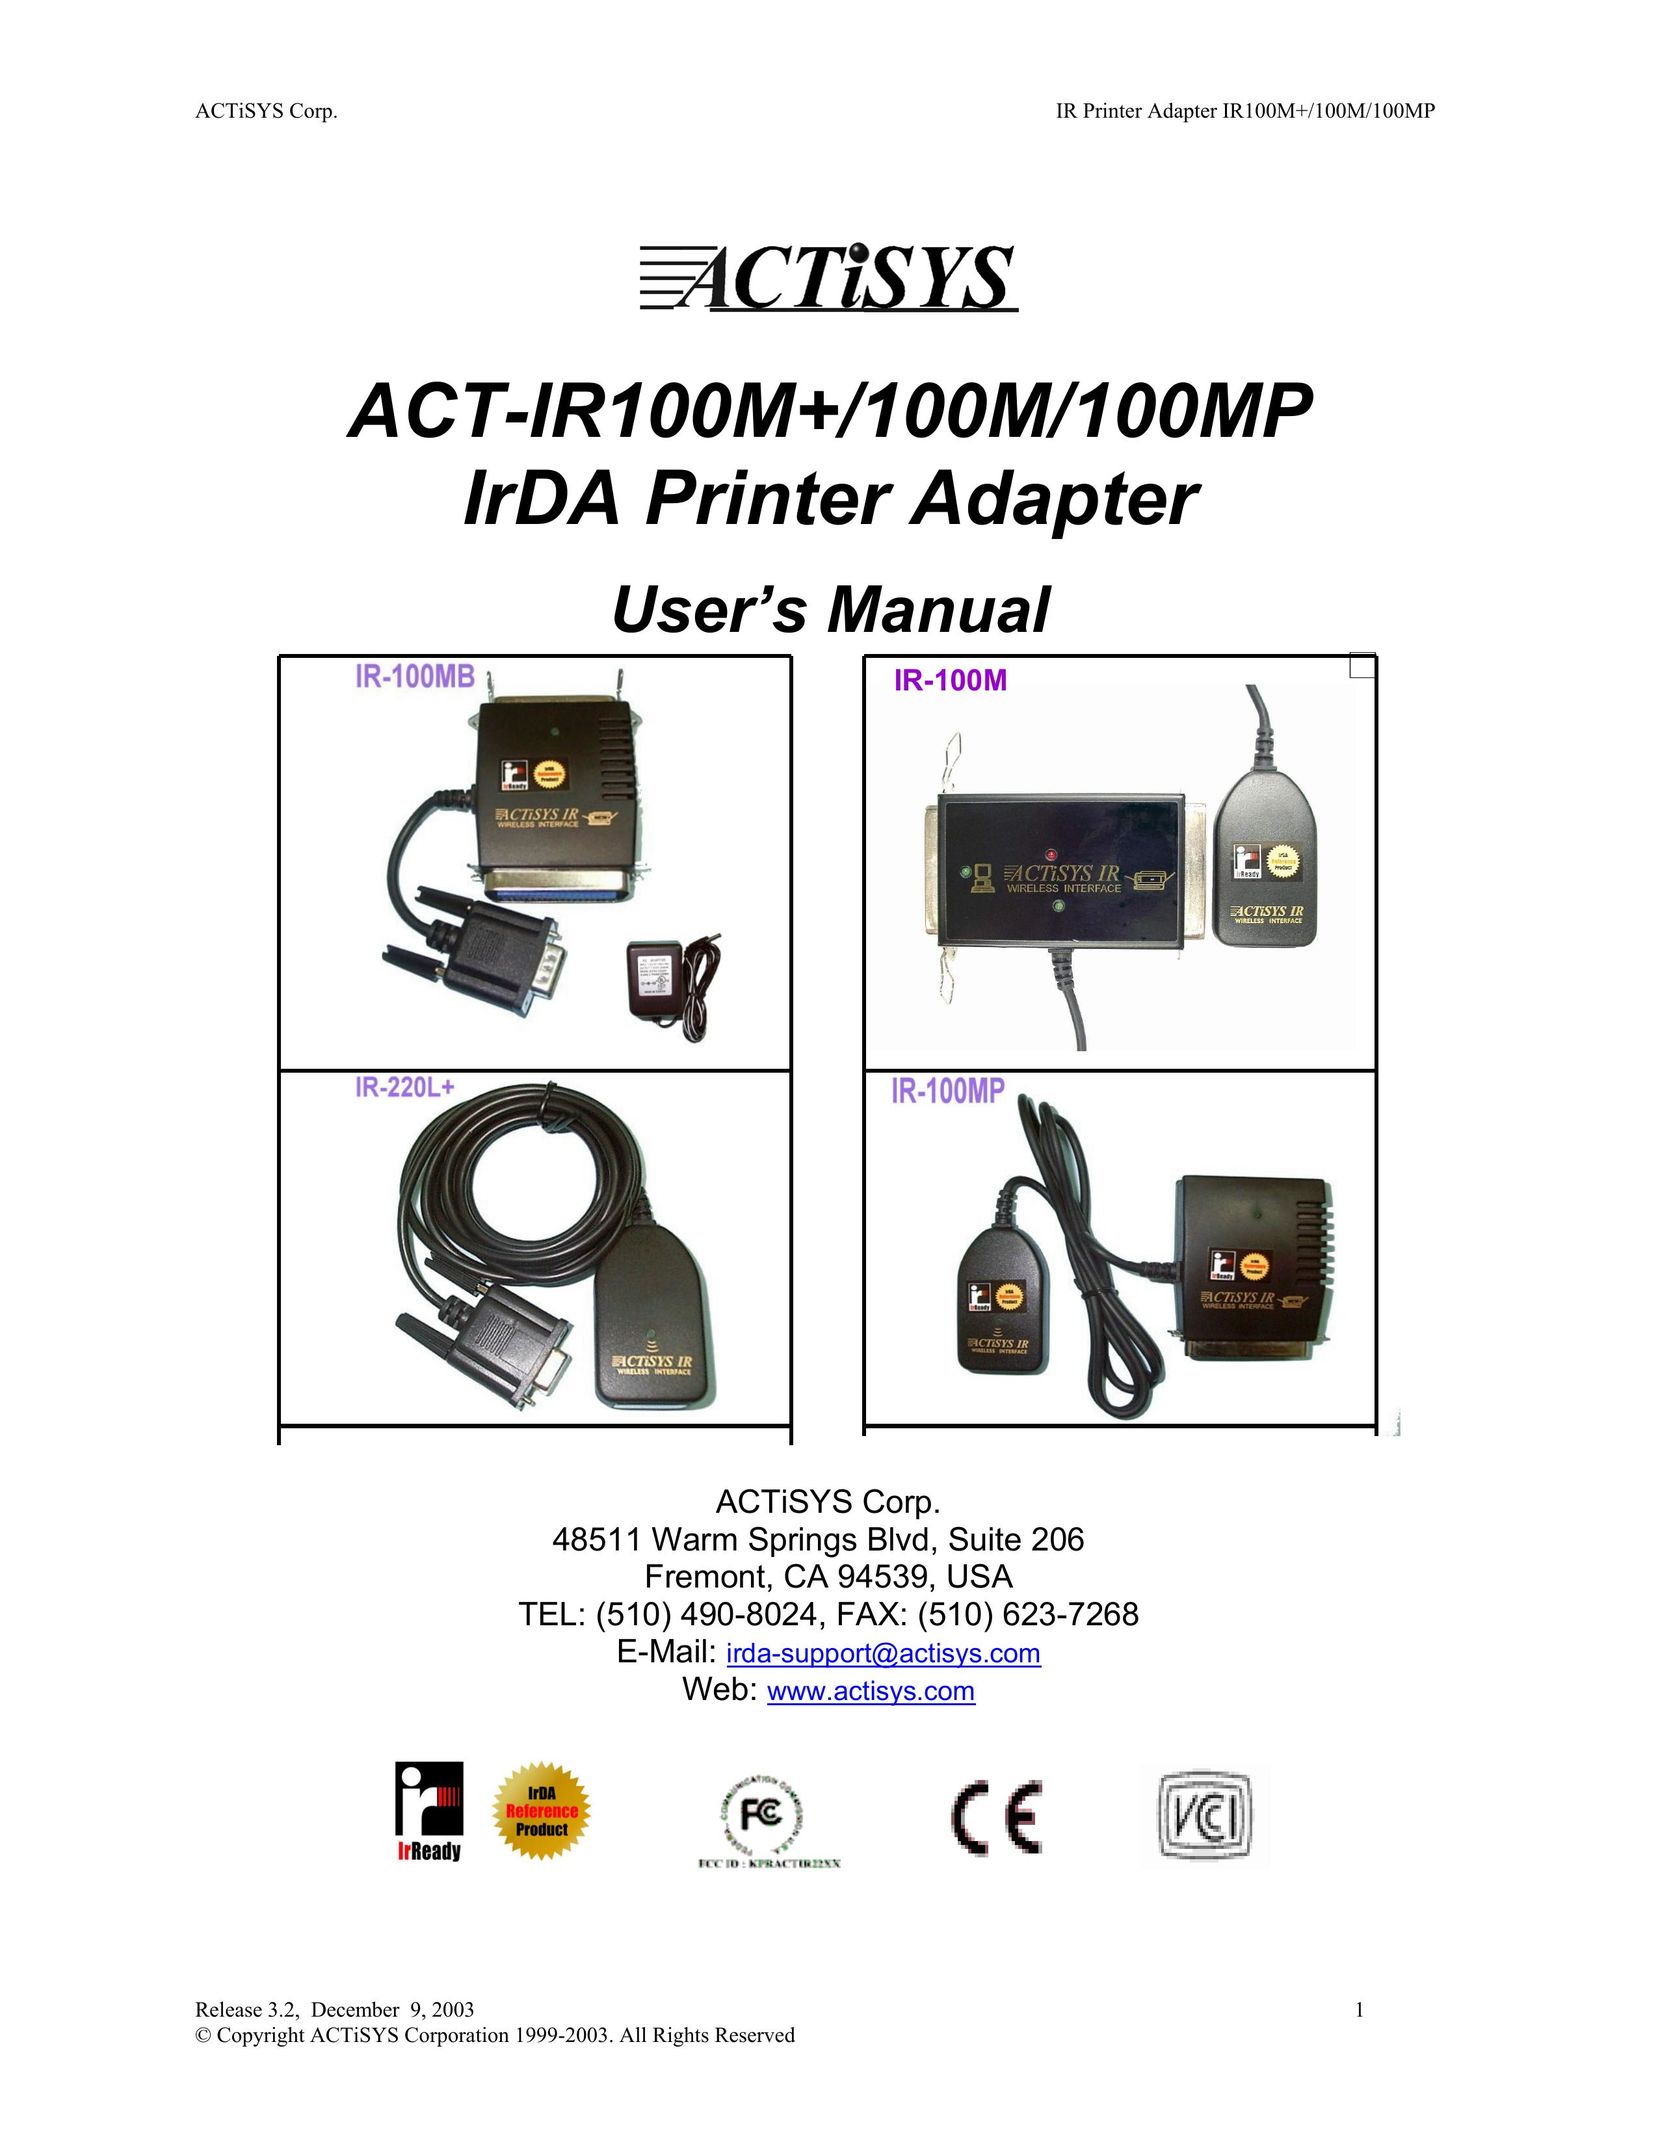 ACTiSYS ACT-IR100M+ Network Card User Manual